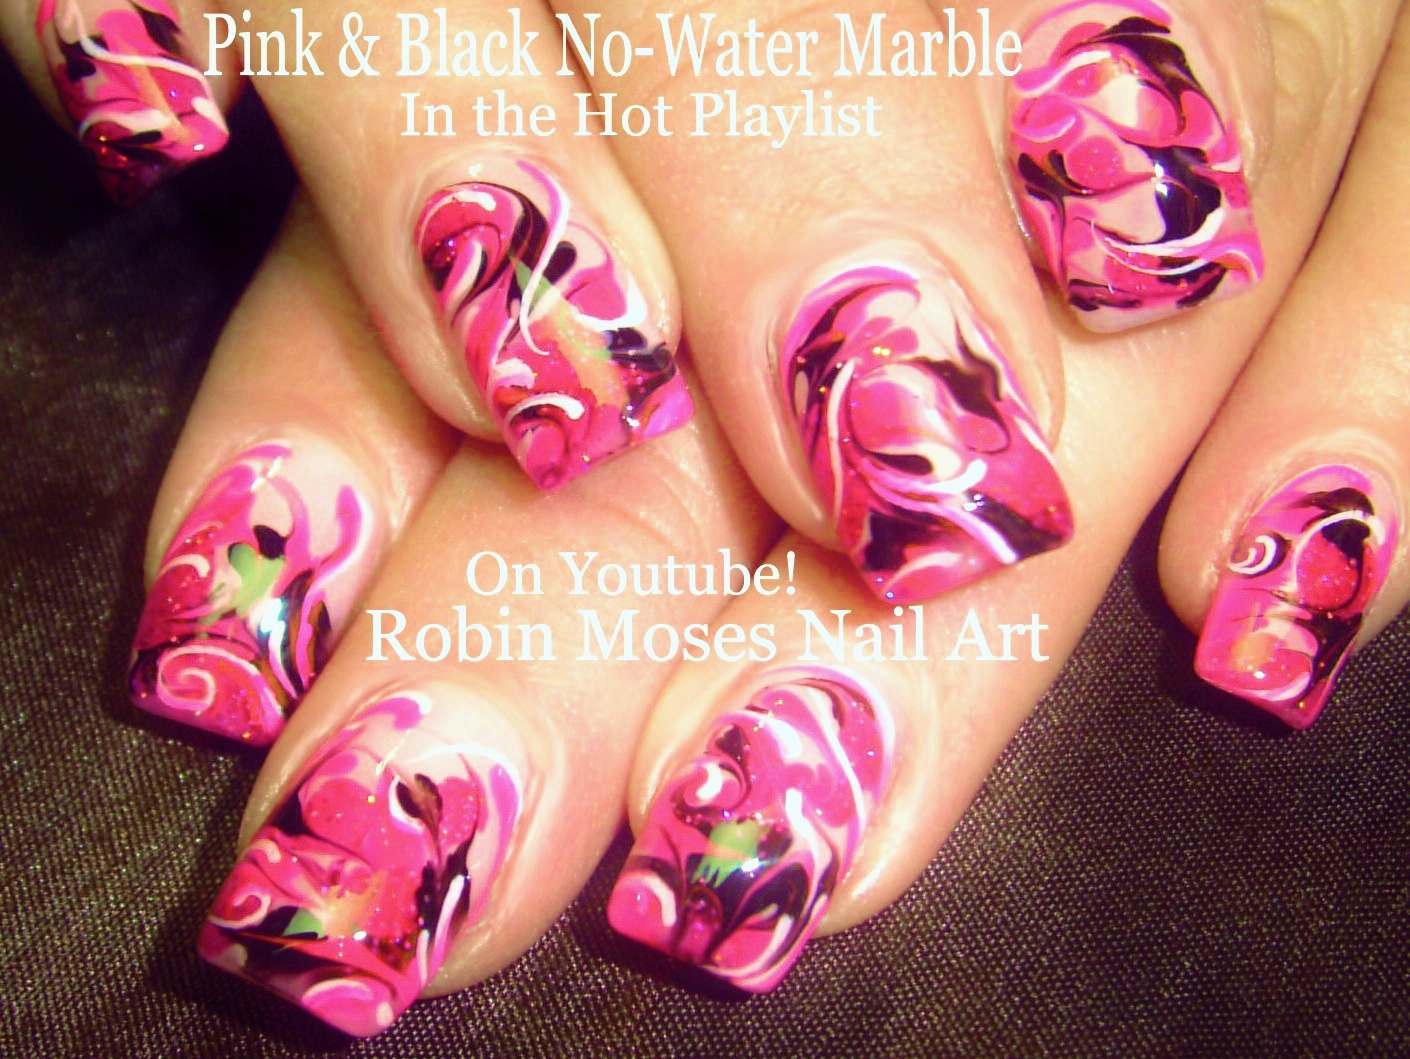 1. Unique Pink Marble Nail Design - wide 3